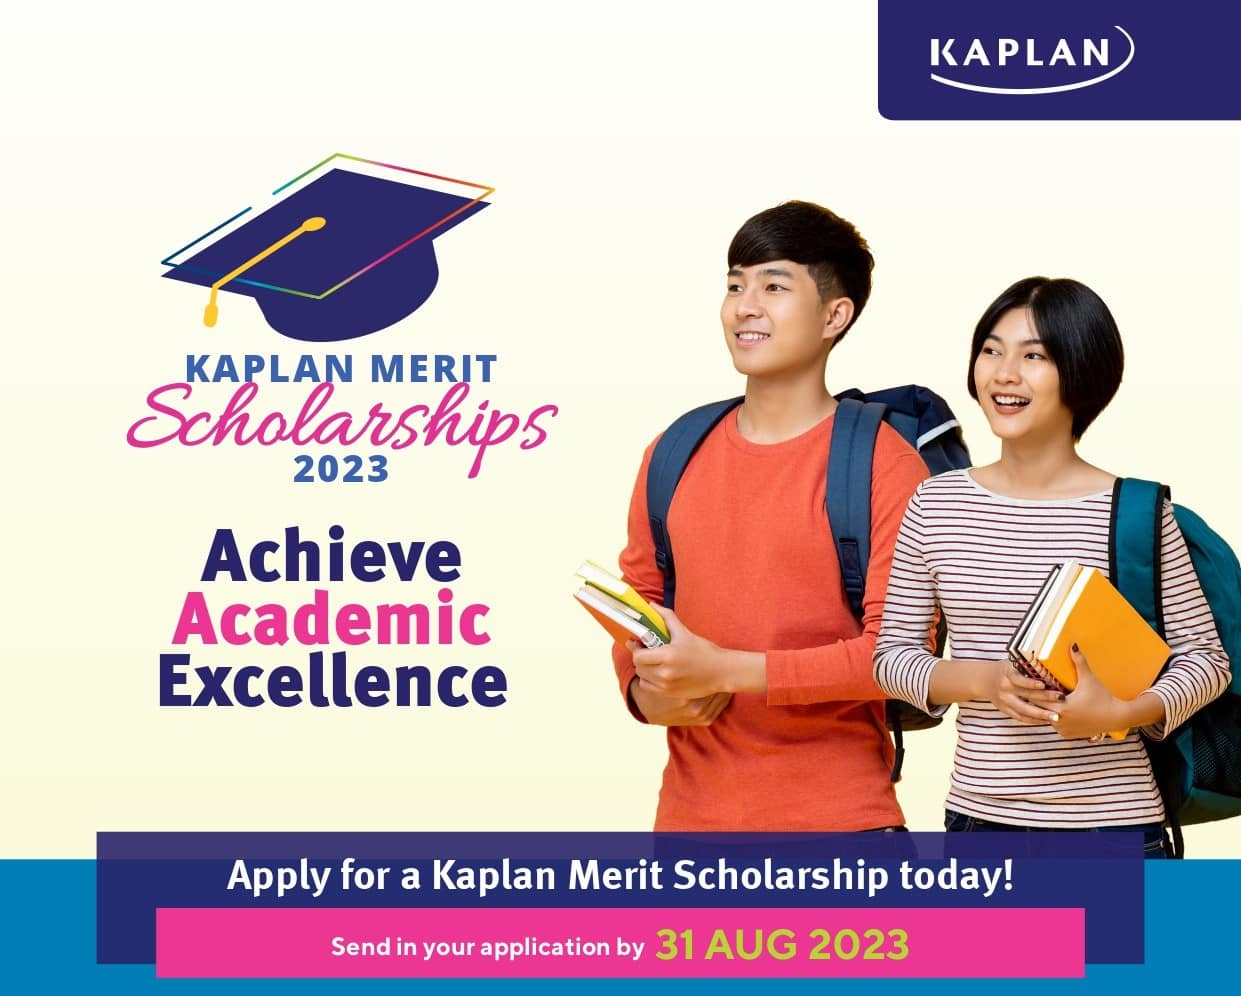 hoc bong kaplan singapore 2023 - Du học hè Singapore tại trường Kaplan 1 tuần năm 2017